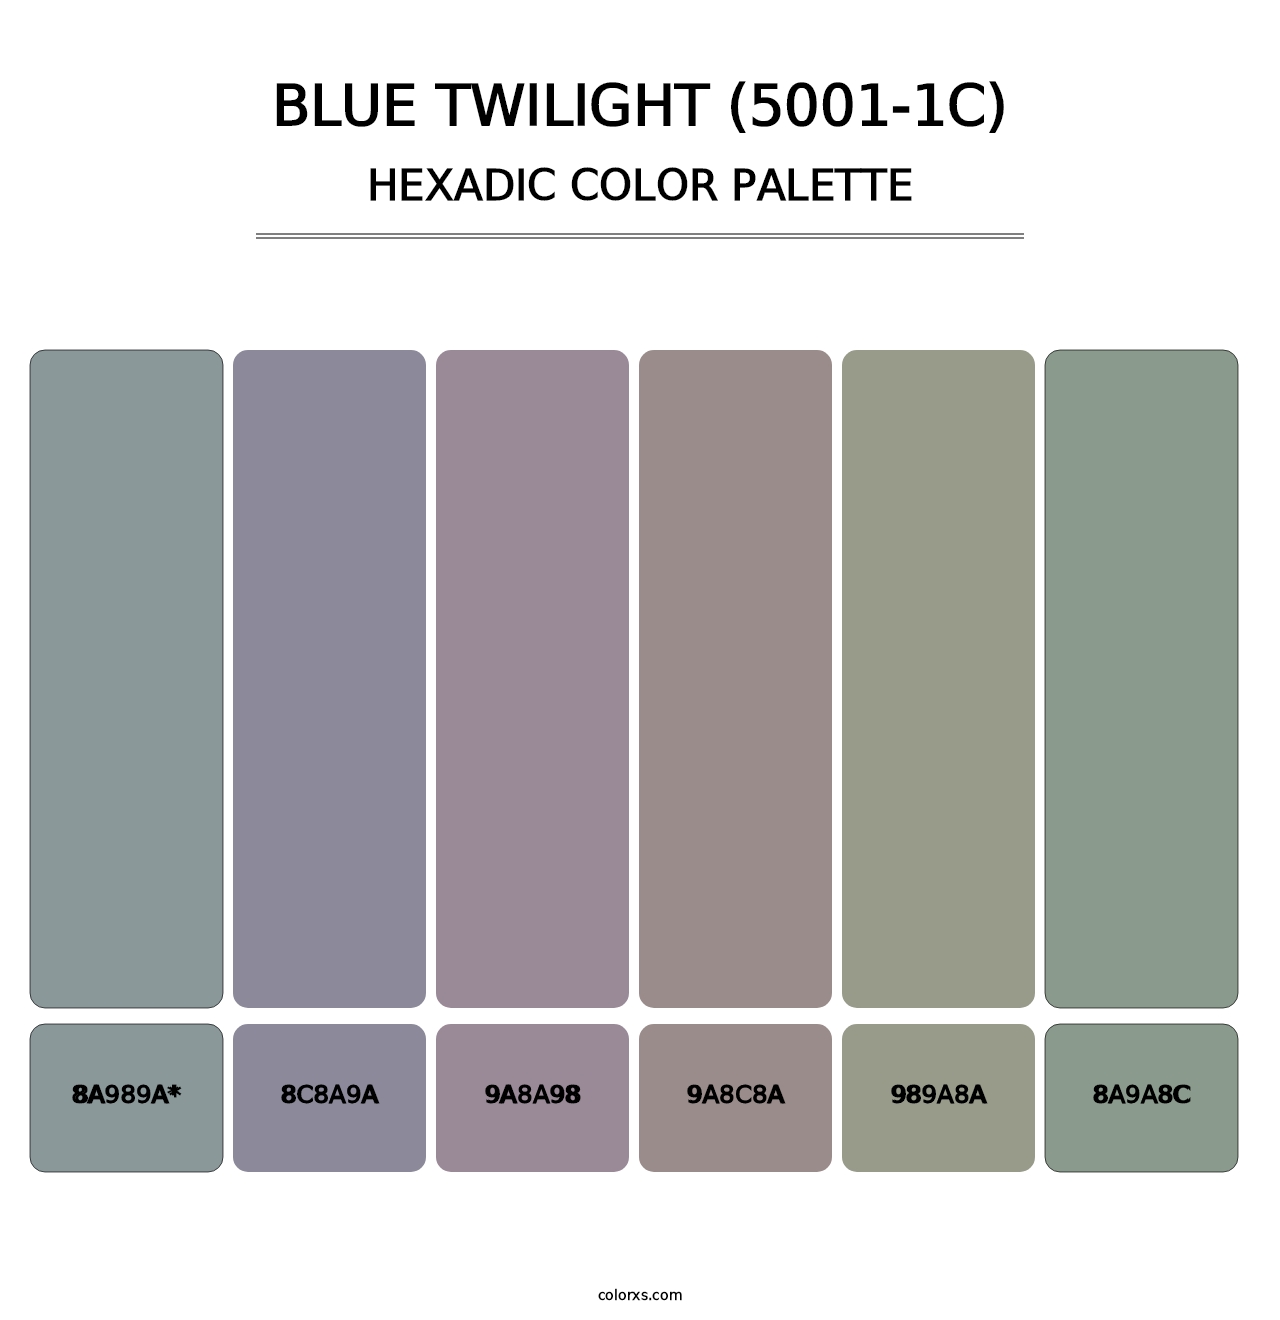 Blue Twilight (5001-1C) - Hexadic Color Palette